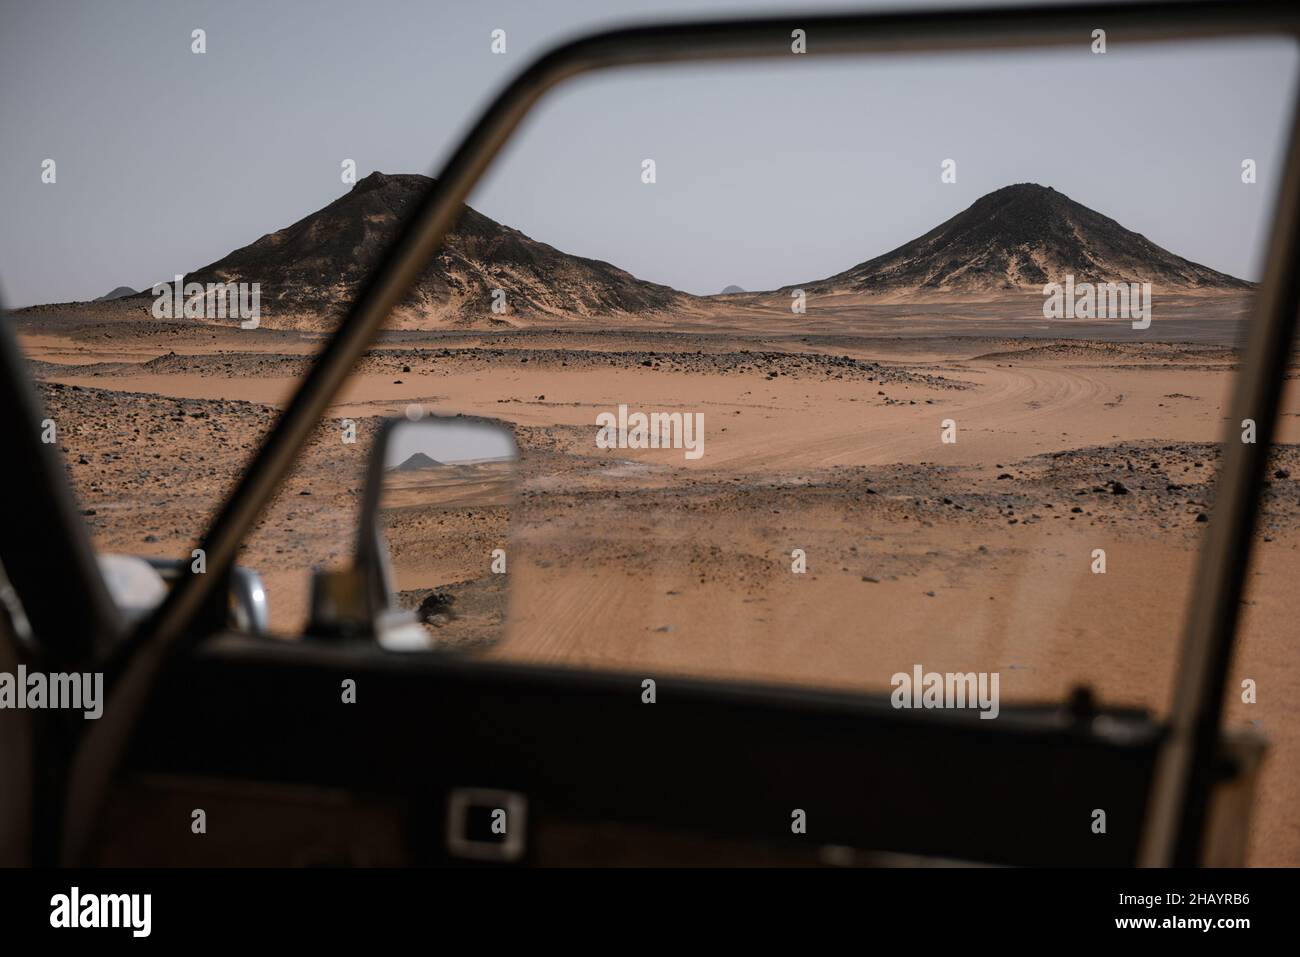 View of Black Desert through an open car window, Egypt Stock Photo